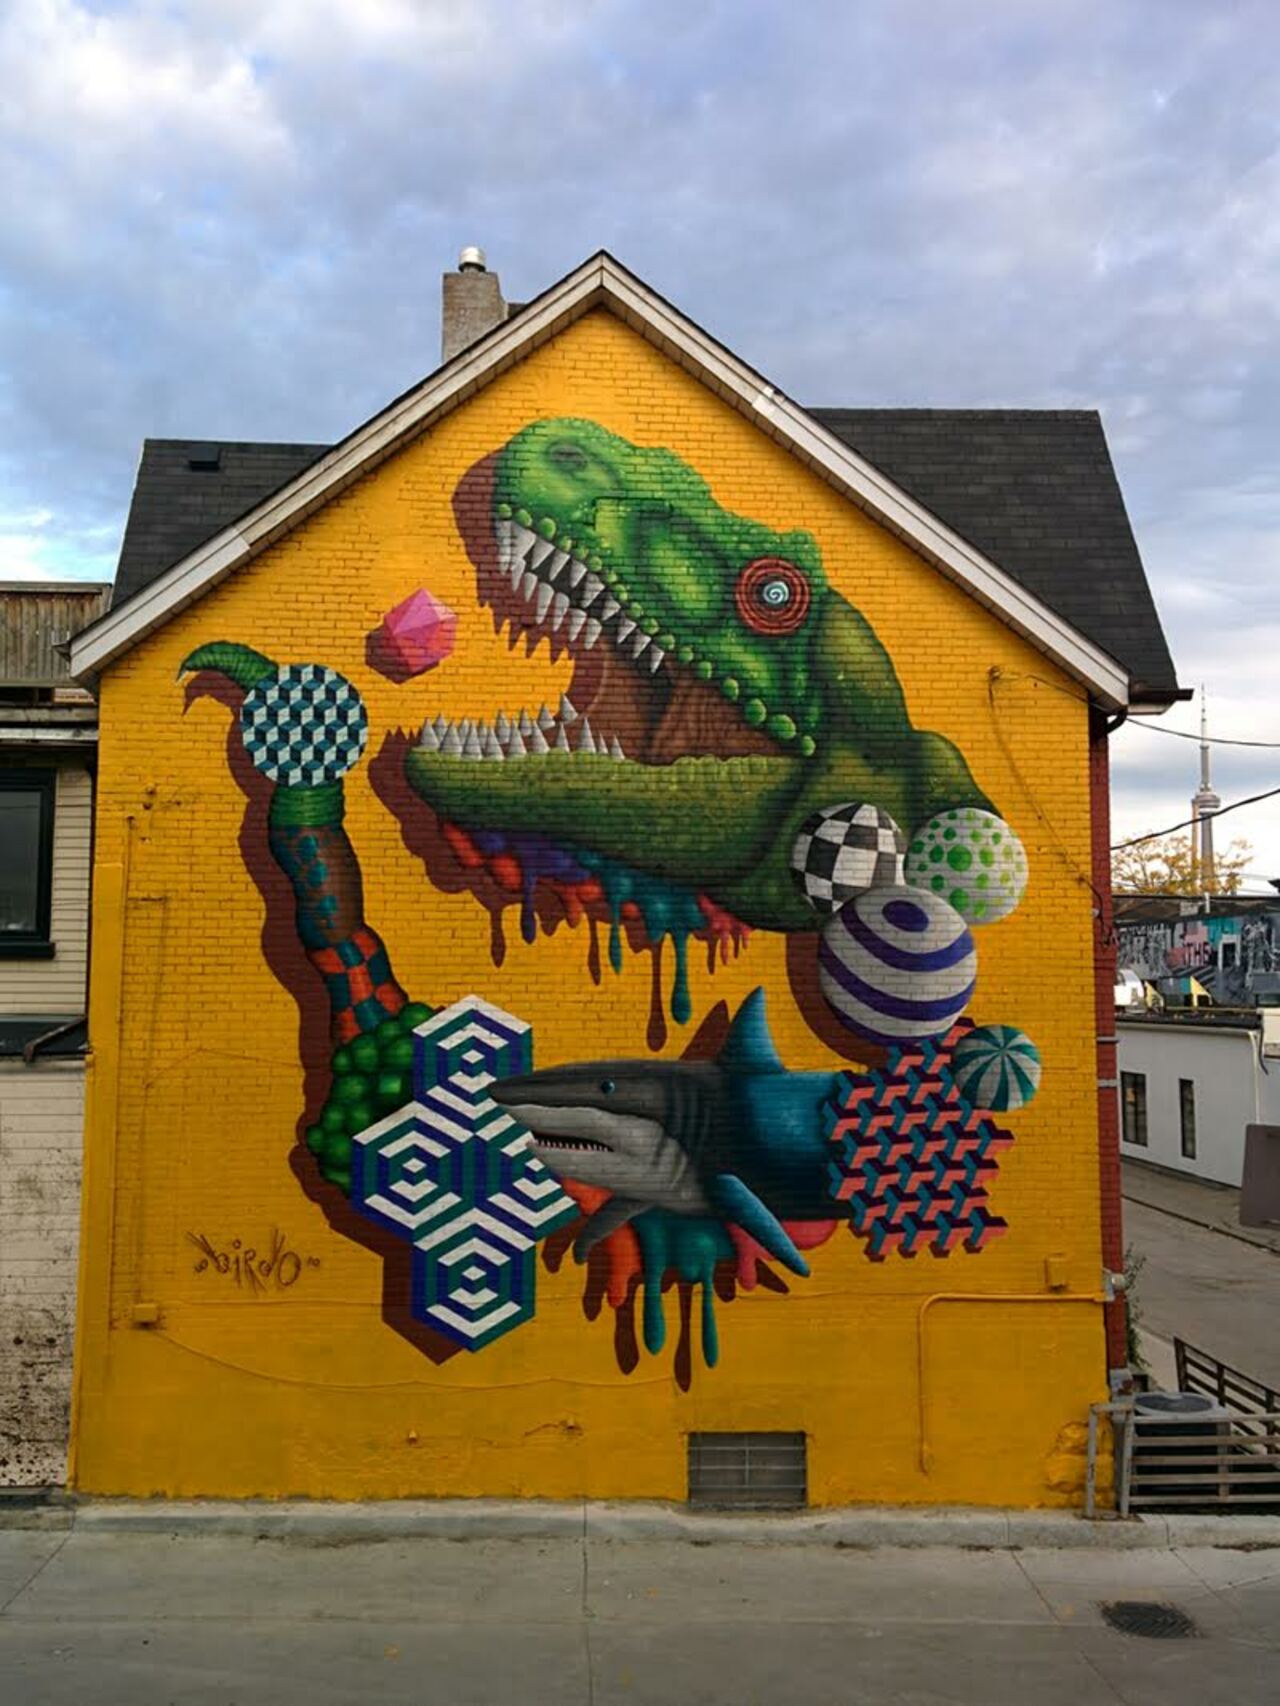 RT @allcitycanvas: “TorontoSharkus-Rex” #mural by #birdO in #Toronto  #streetart #graffiti #jerryrugg http://t.co/wGAV1mX5hY